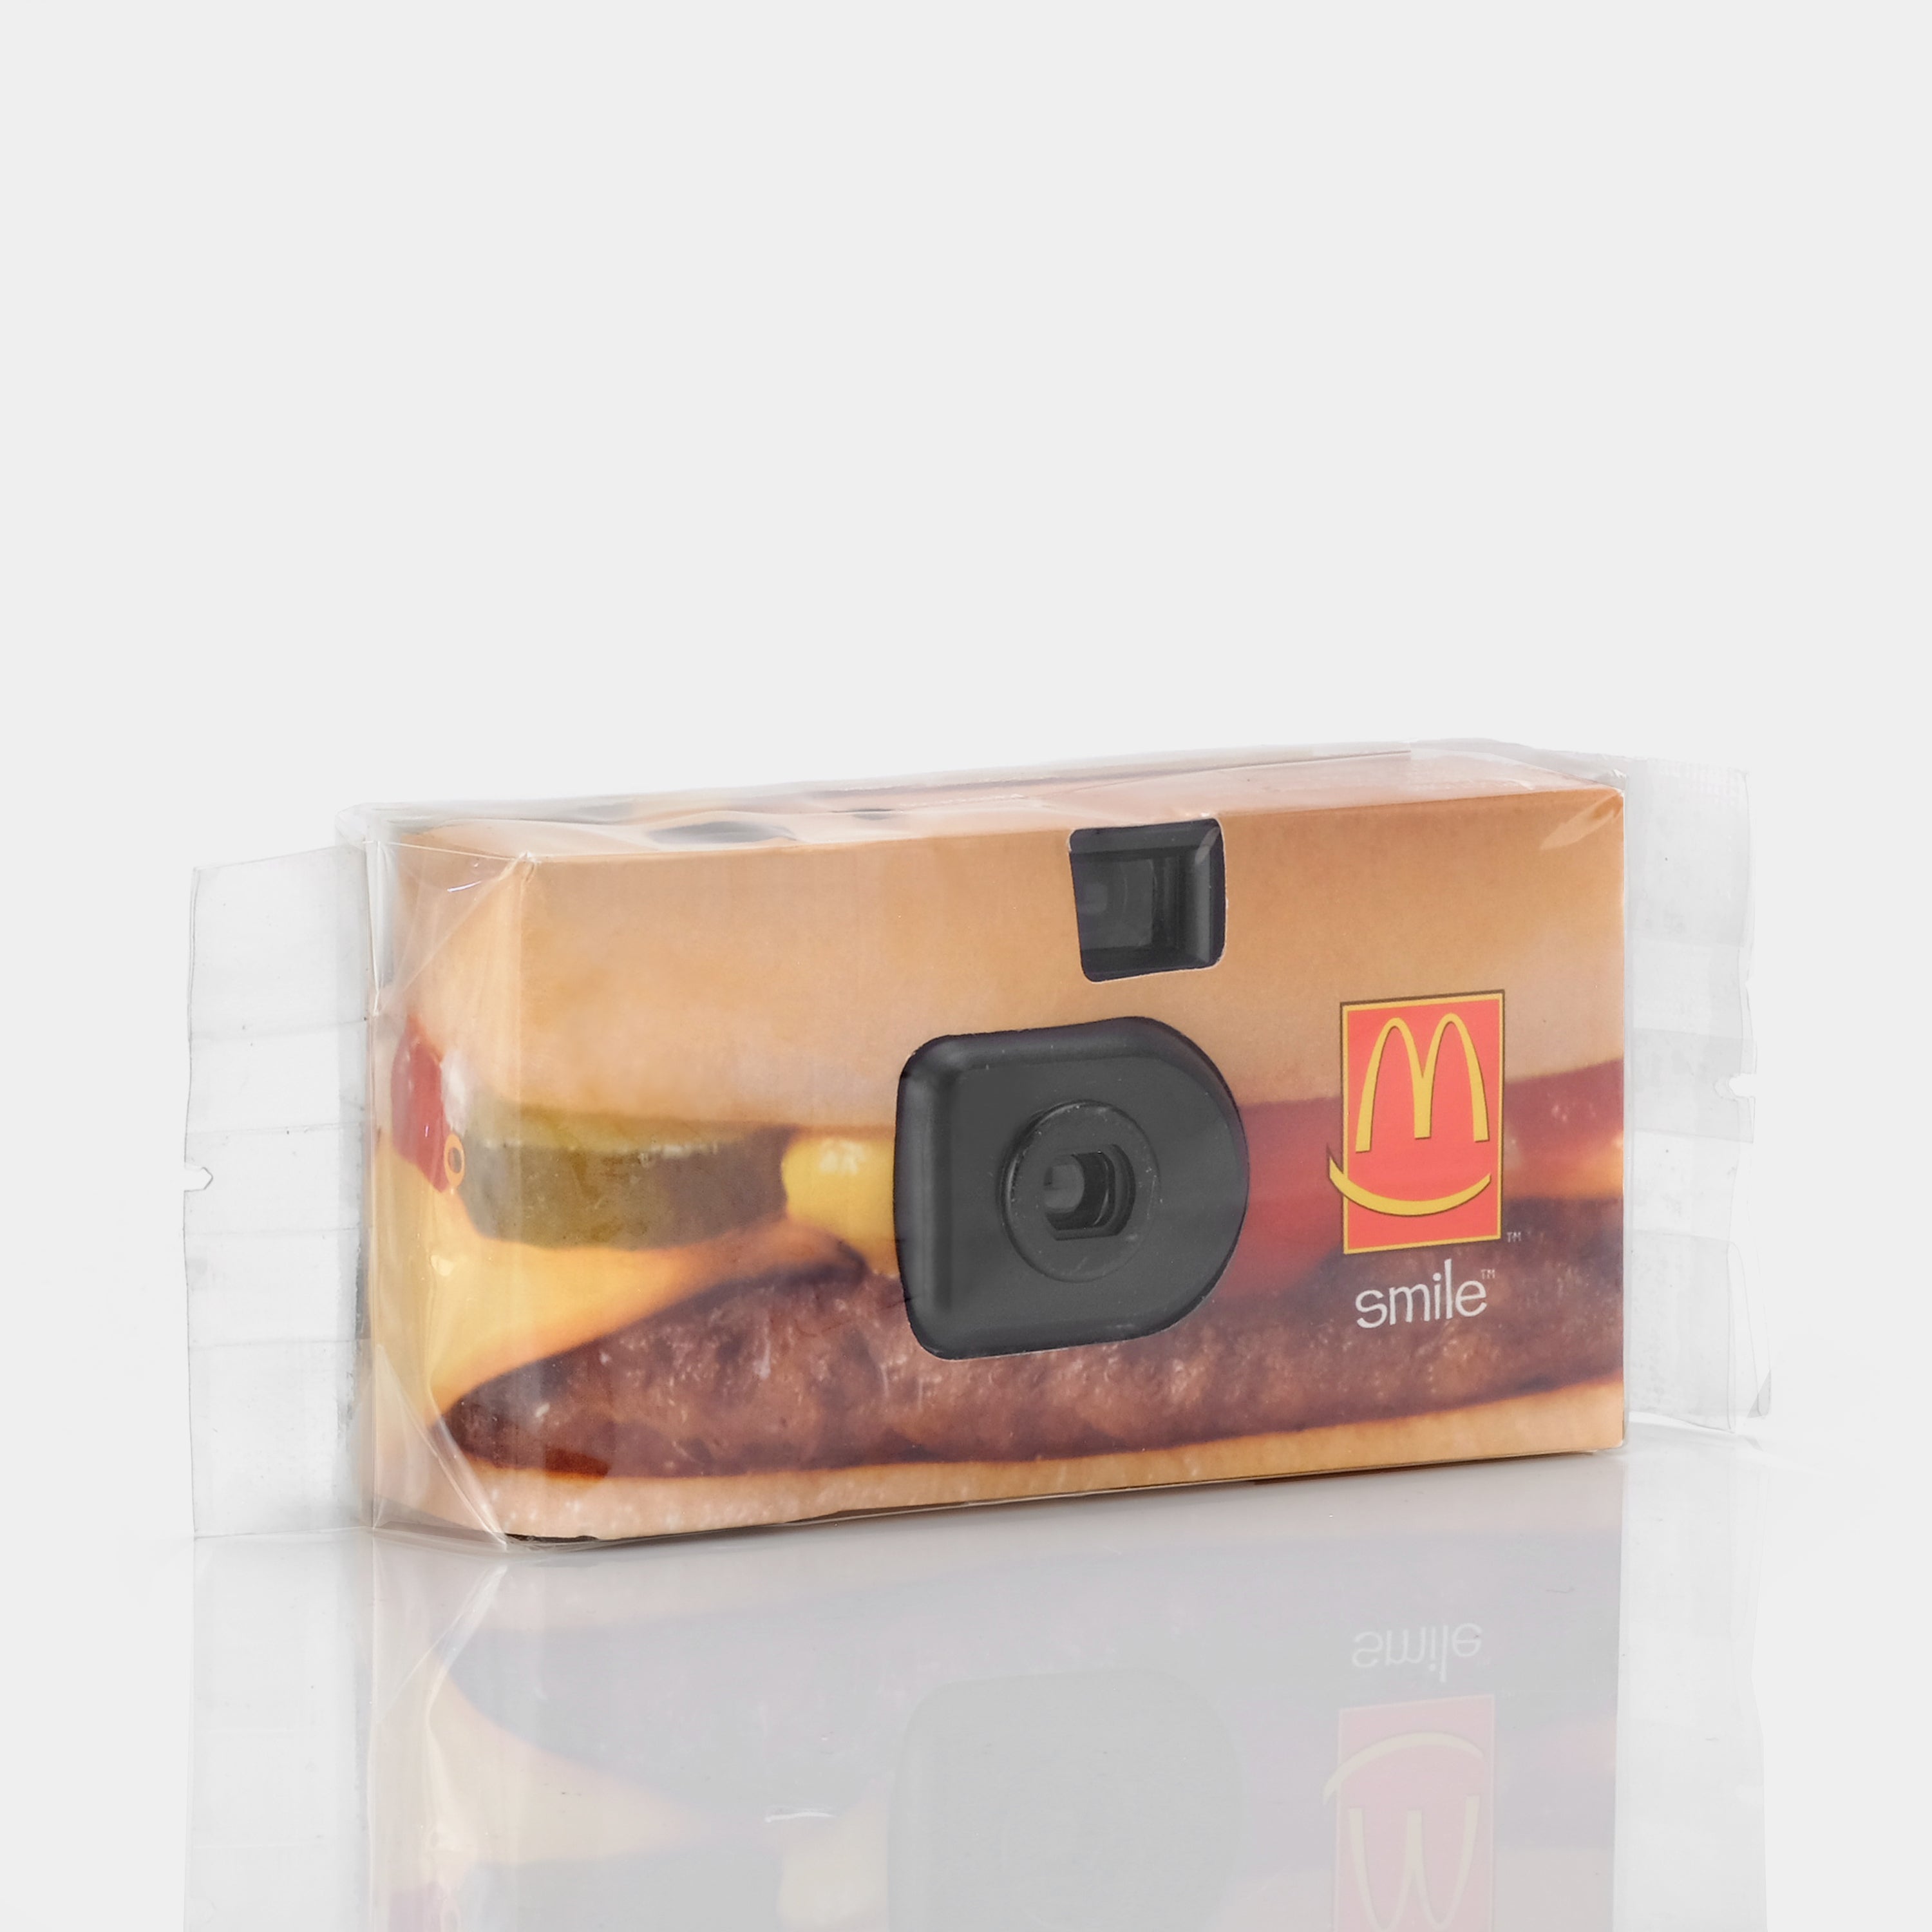 Vintage Promotional McDonald's Burger Disposable 35mm Film Camera